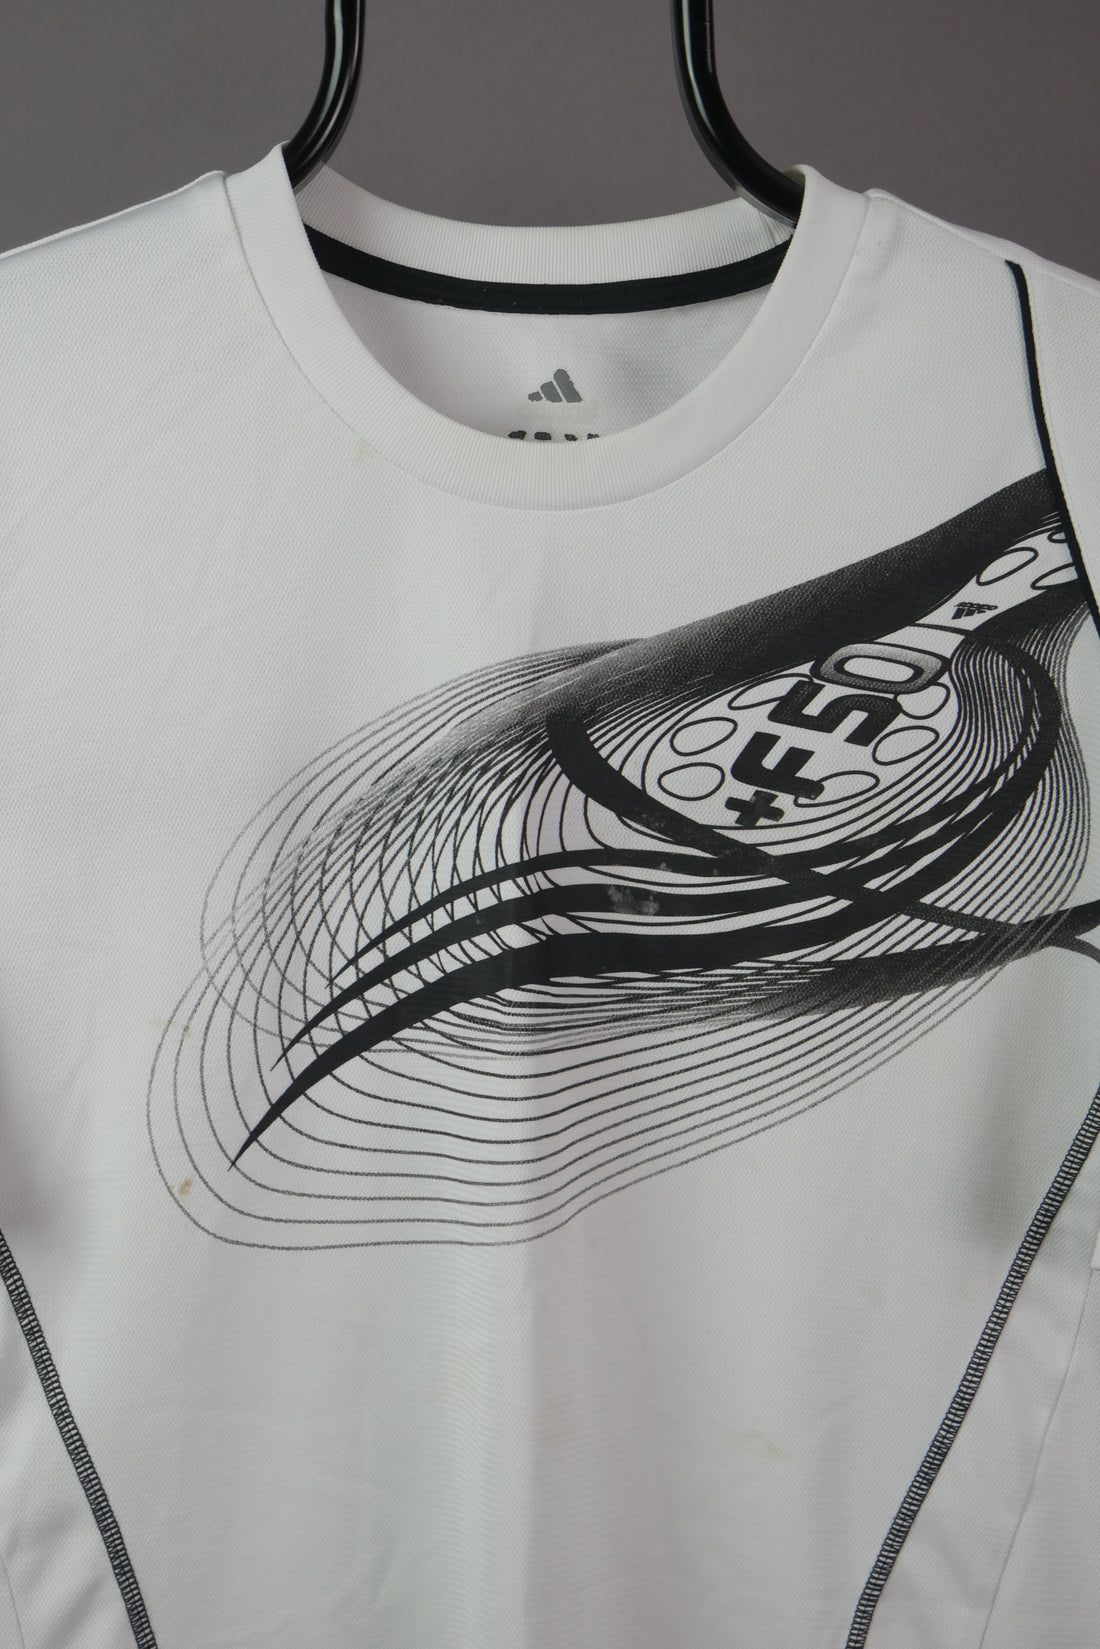 The Adidas Football Graphic T-Shirt (L)